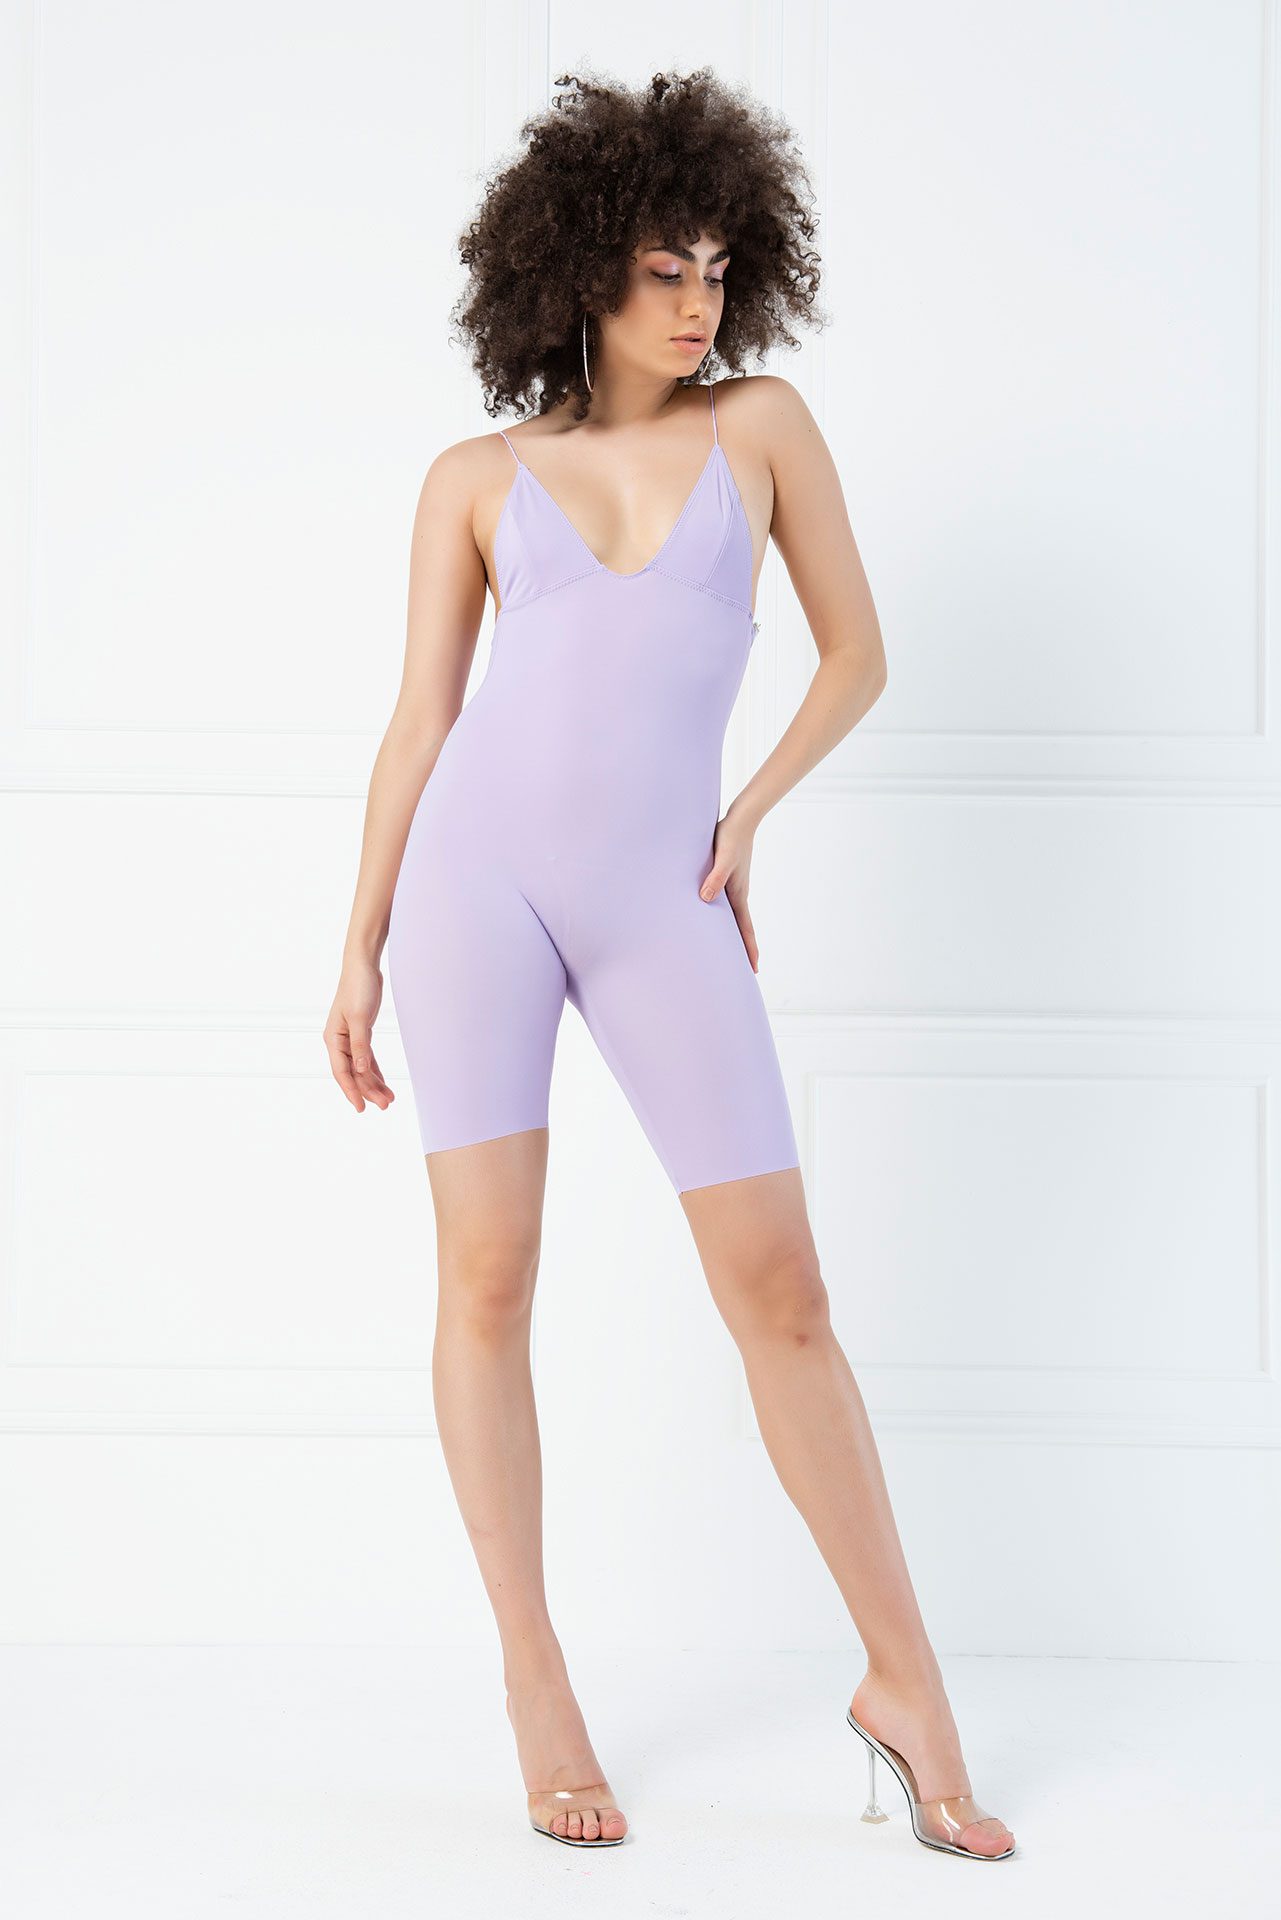 Wholesale Deep V Back Spaghetti Strap Mid-Thigh Shapewear Lilac Bodysuit